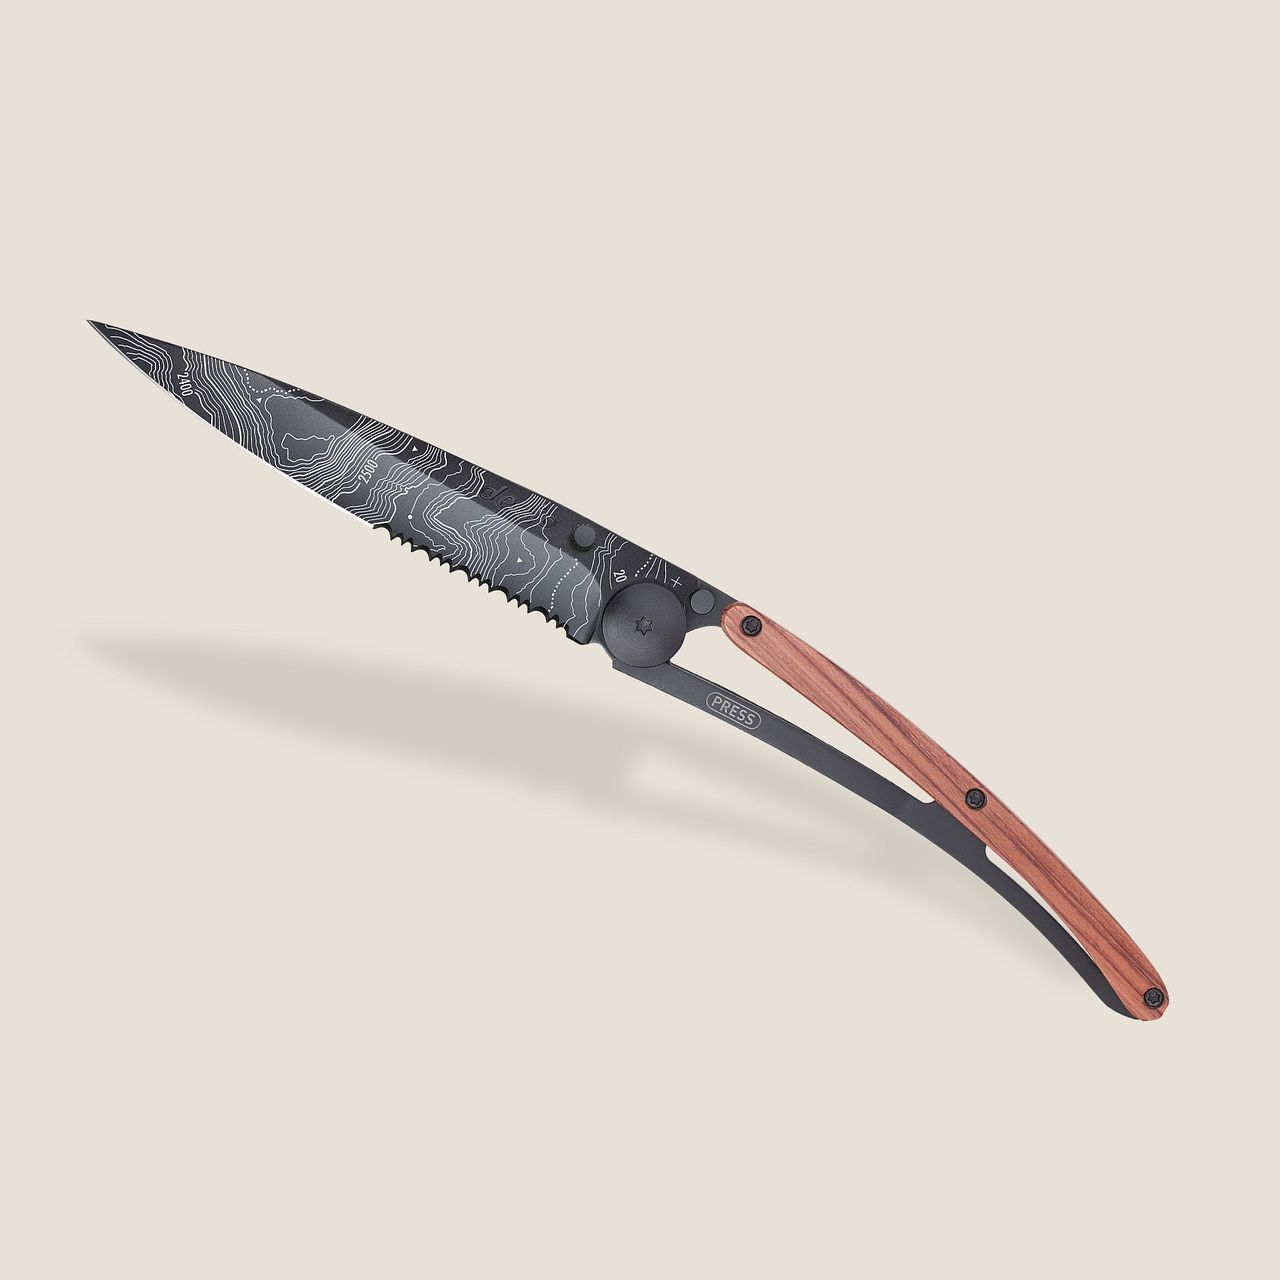 Deejo Serrated 37G Coral Wood / Topography Pocket Knife